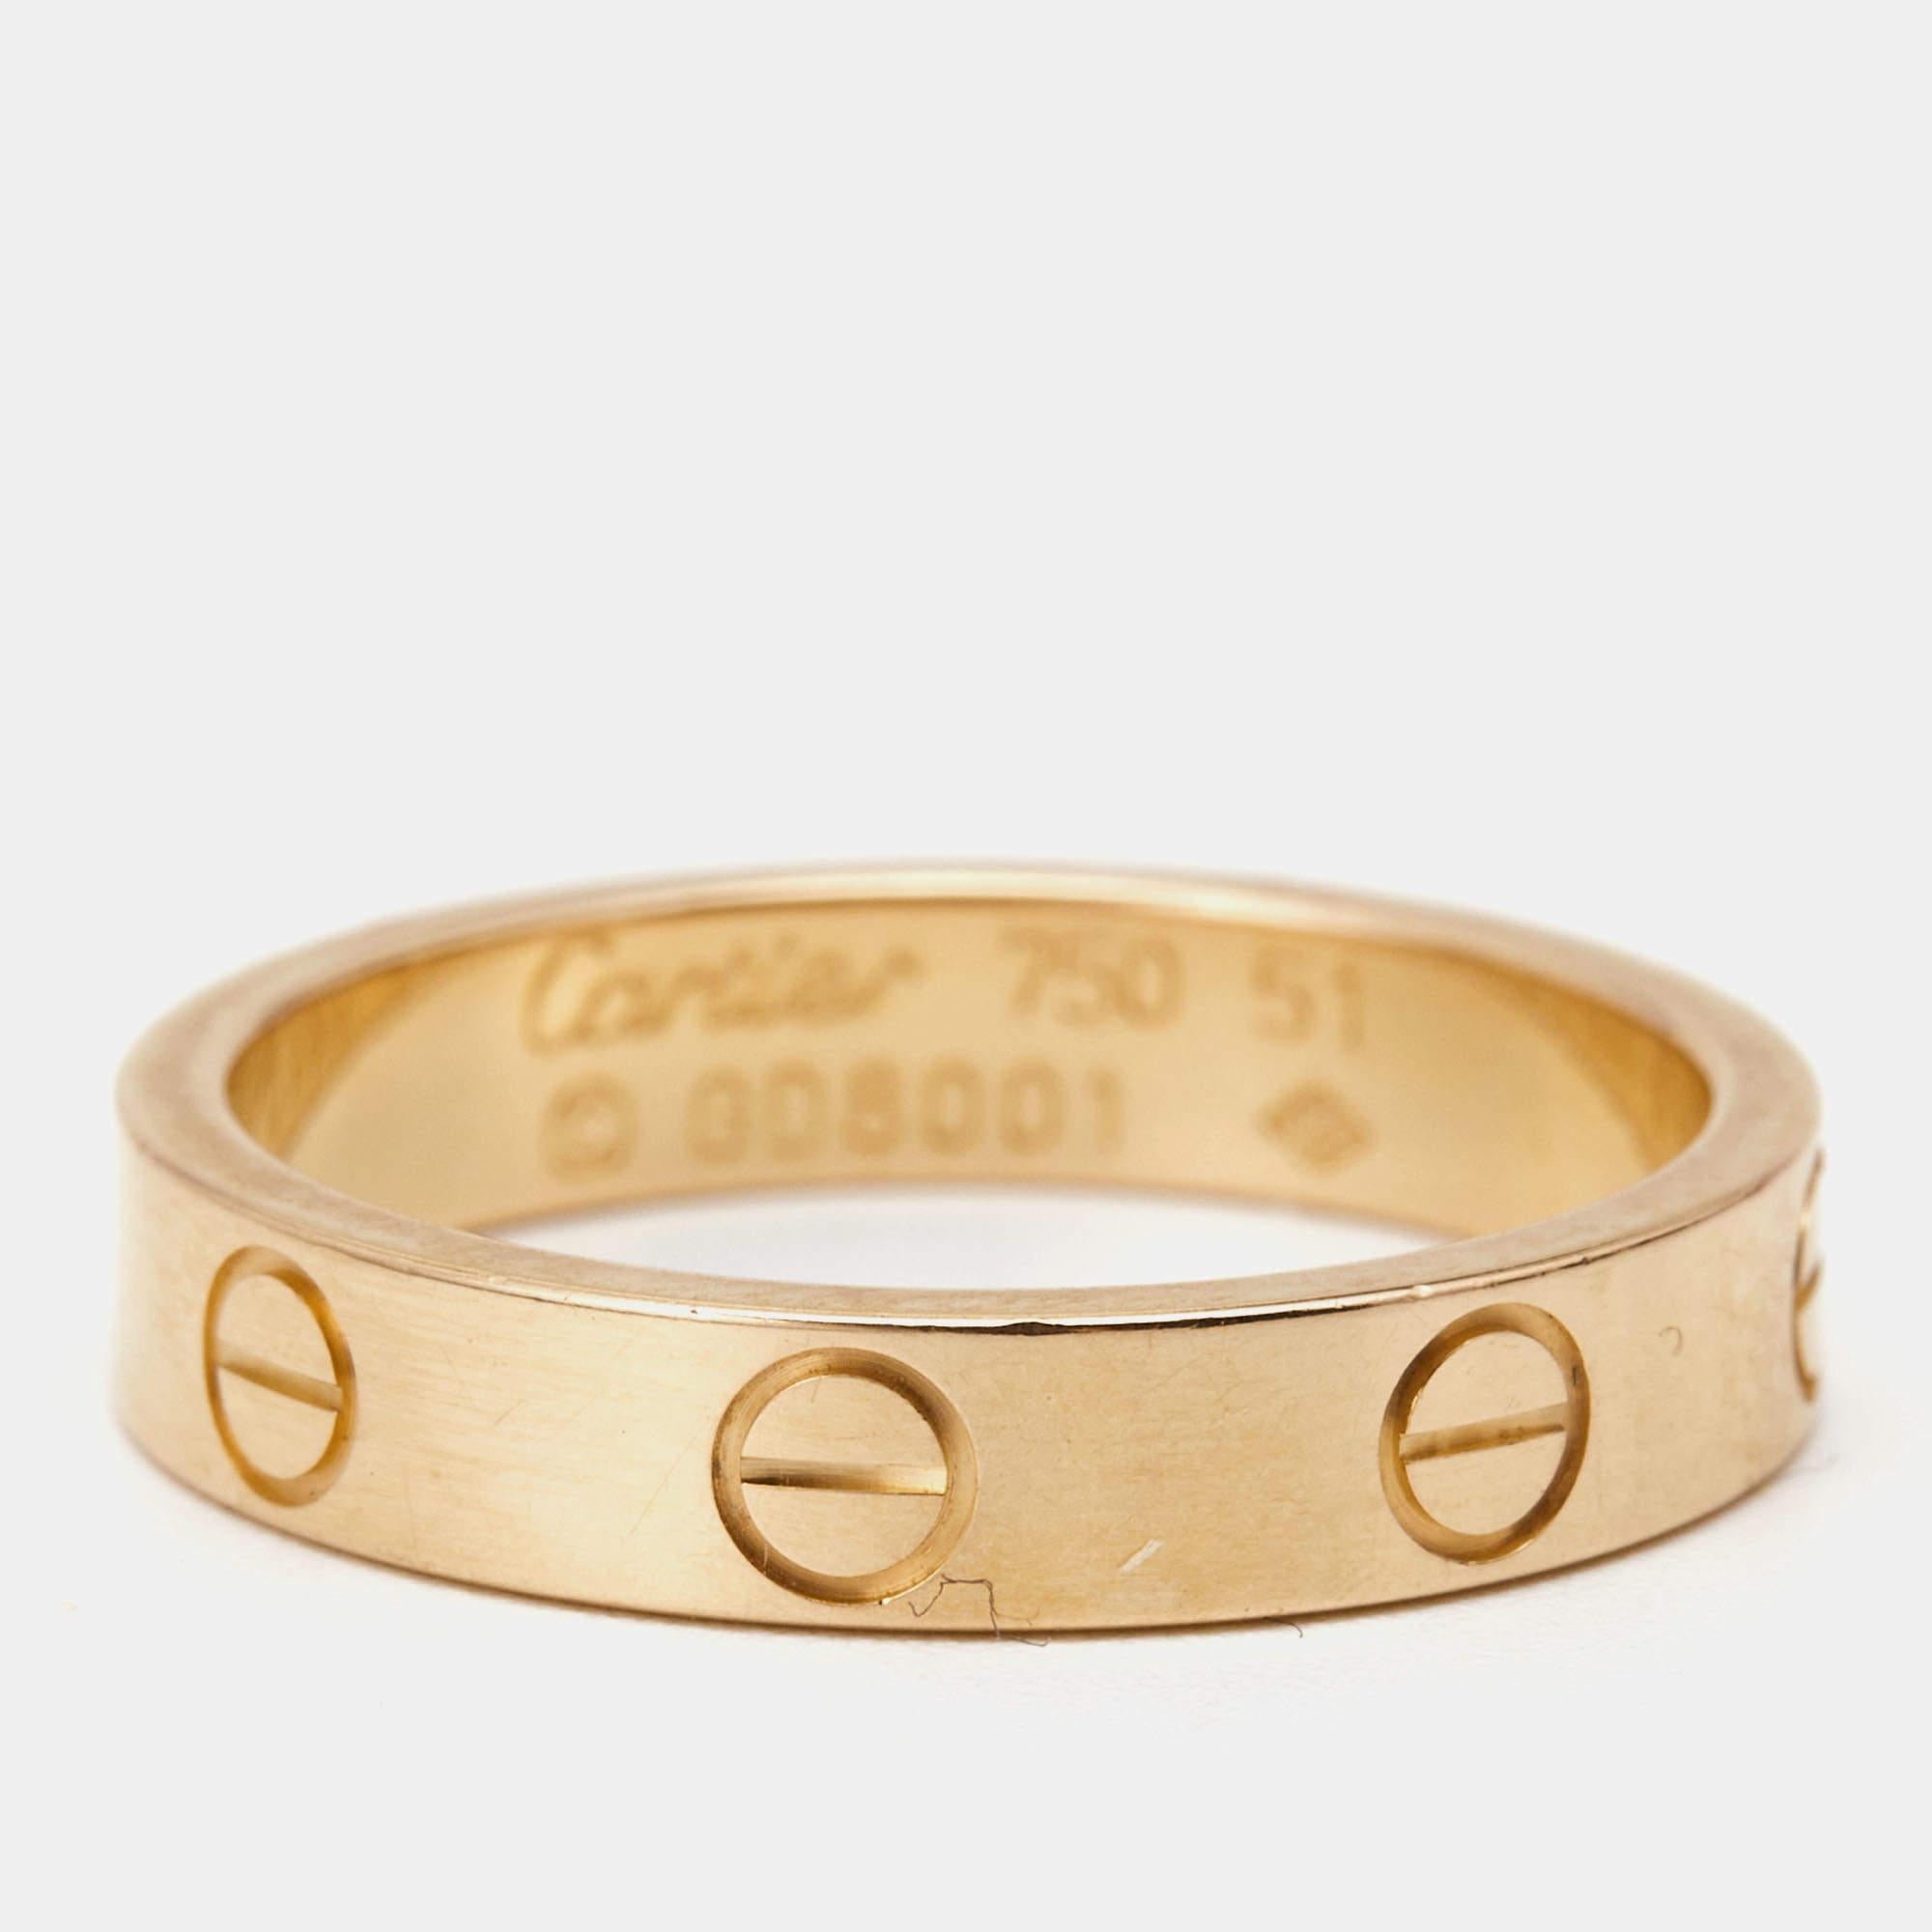 Cartier Love 18K Rose Gold Narrow Wedding Band Ring Size 51 2